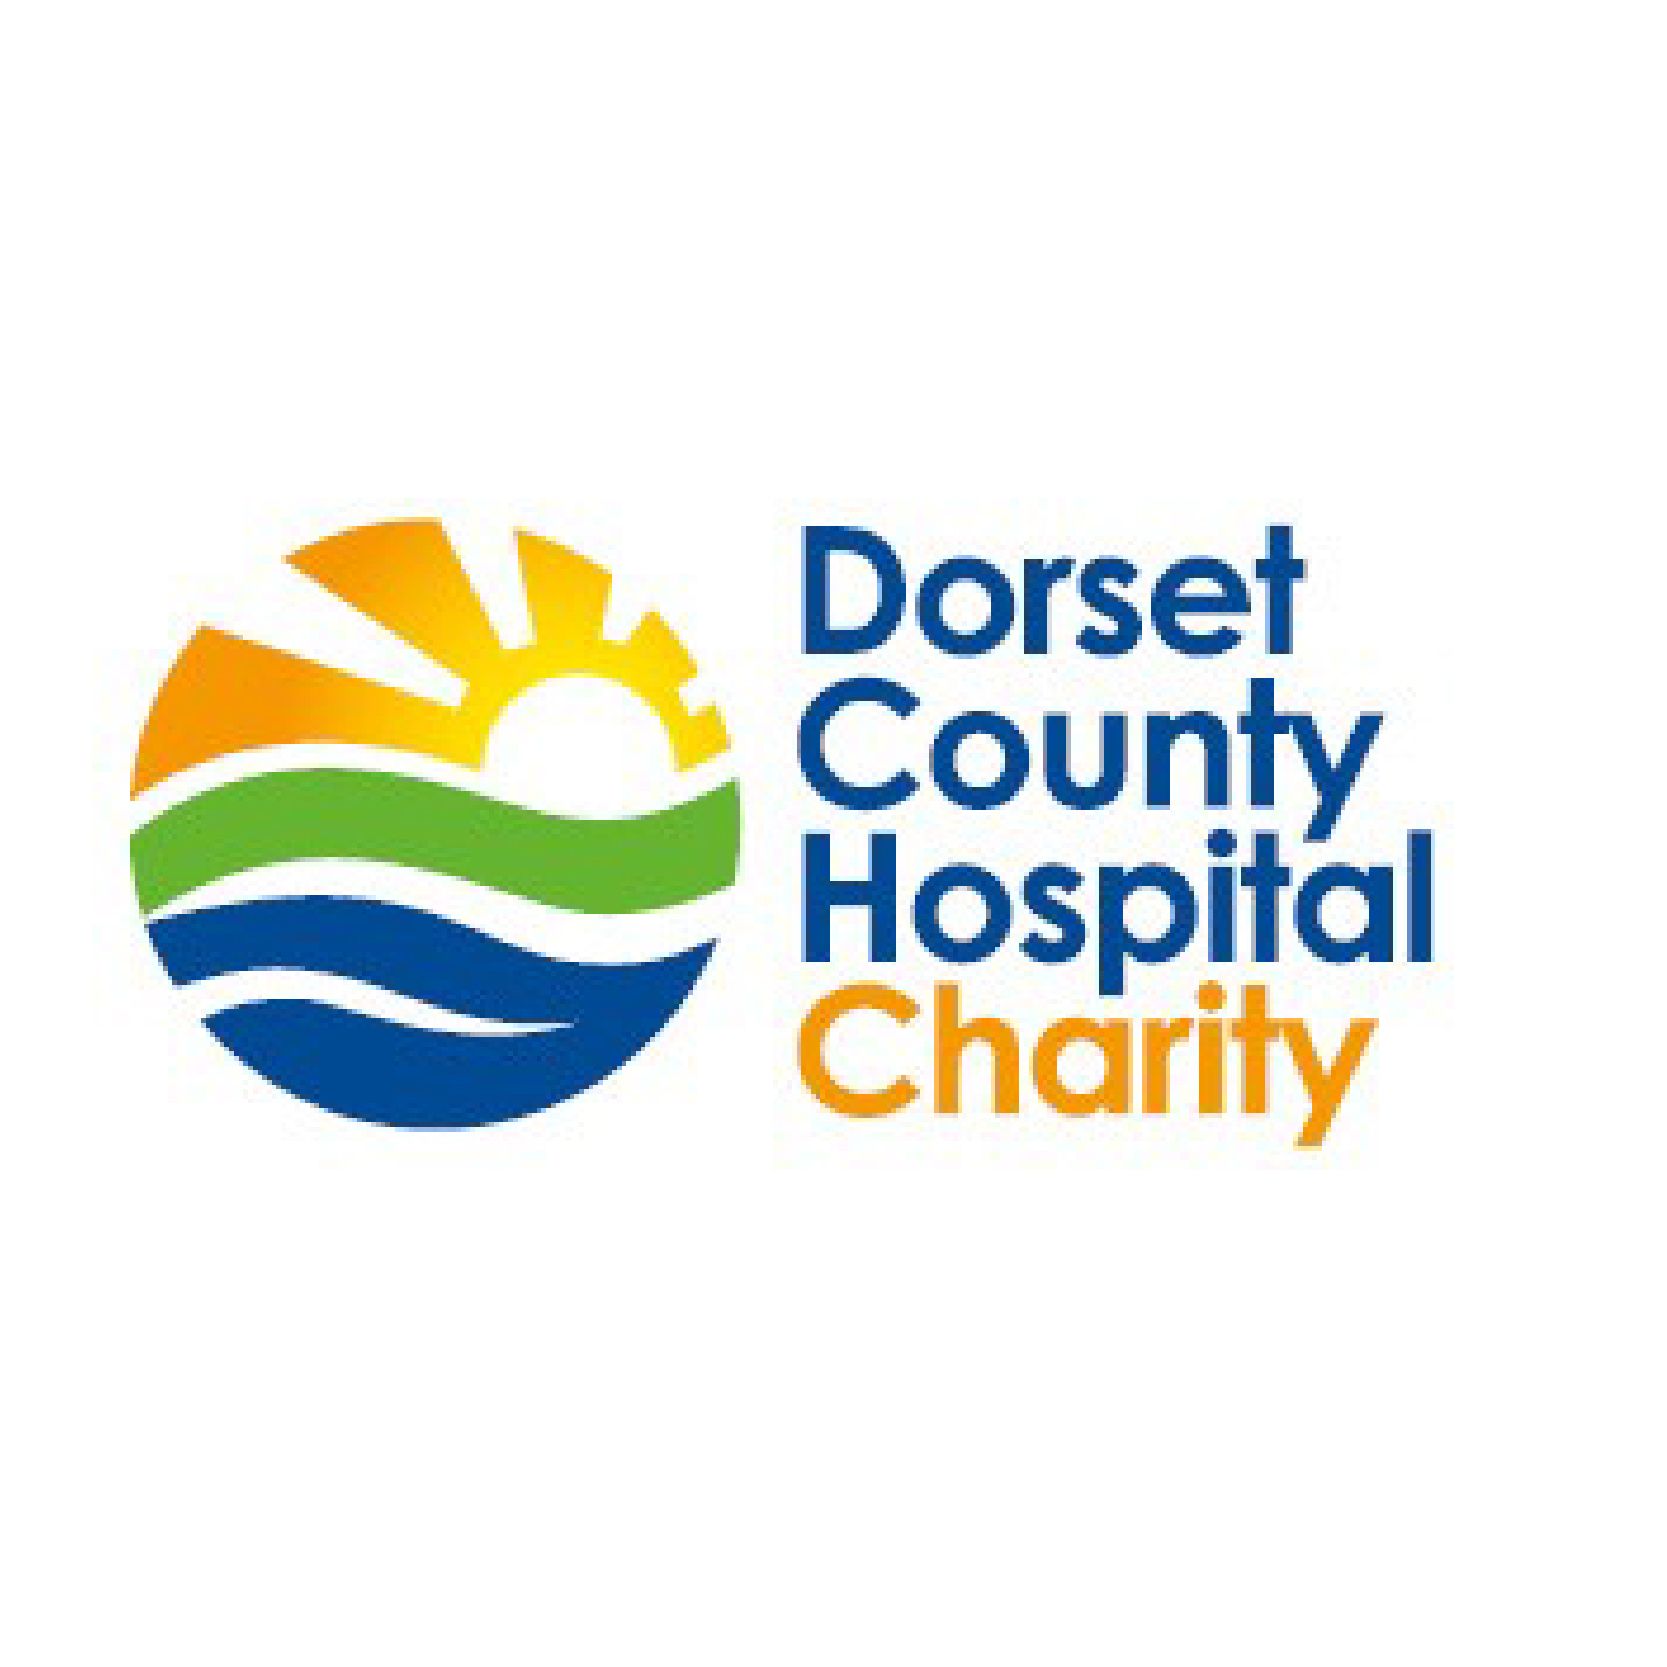 Dorset County Hospital Charity square logo